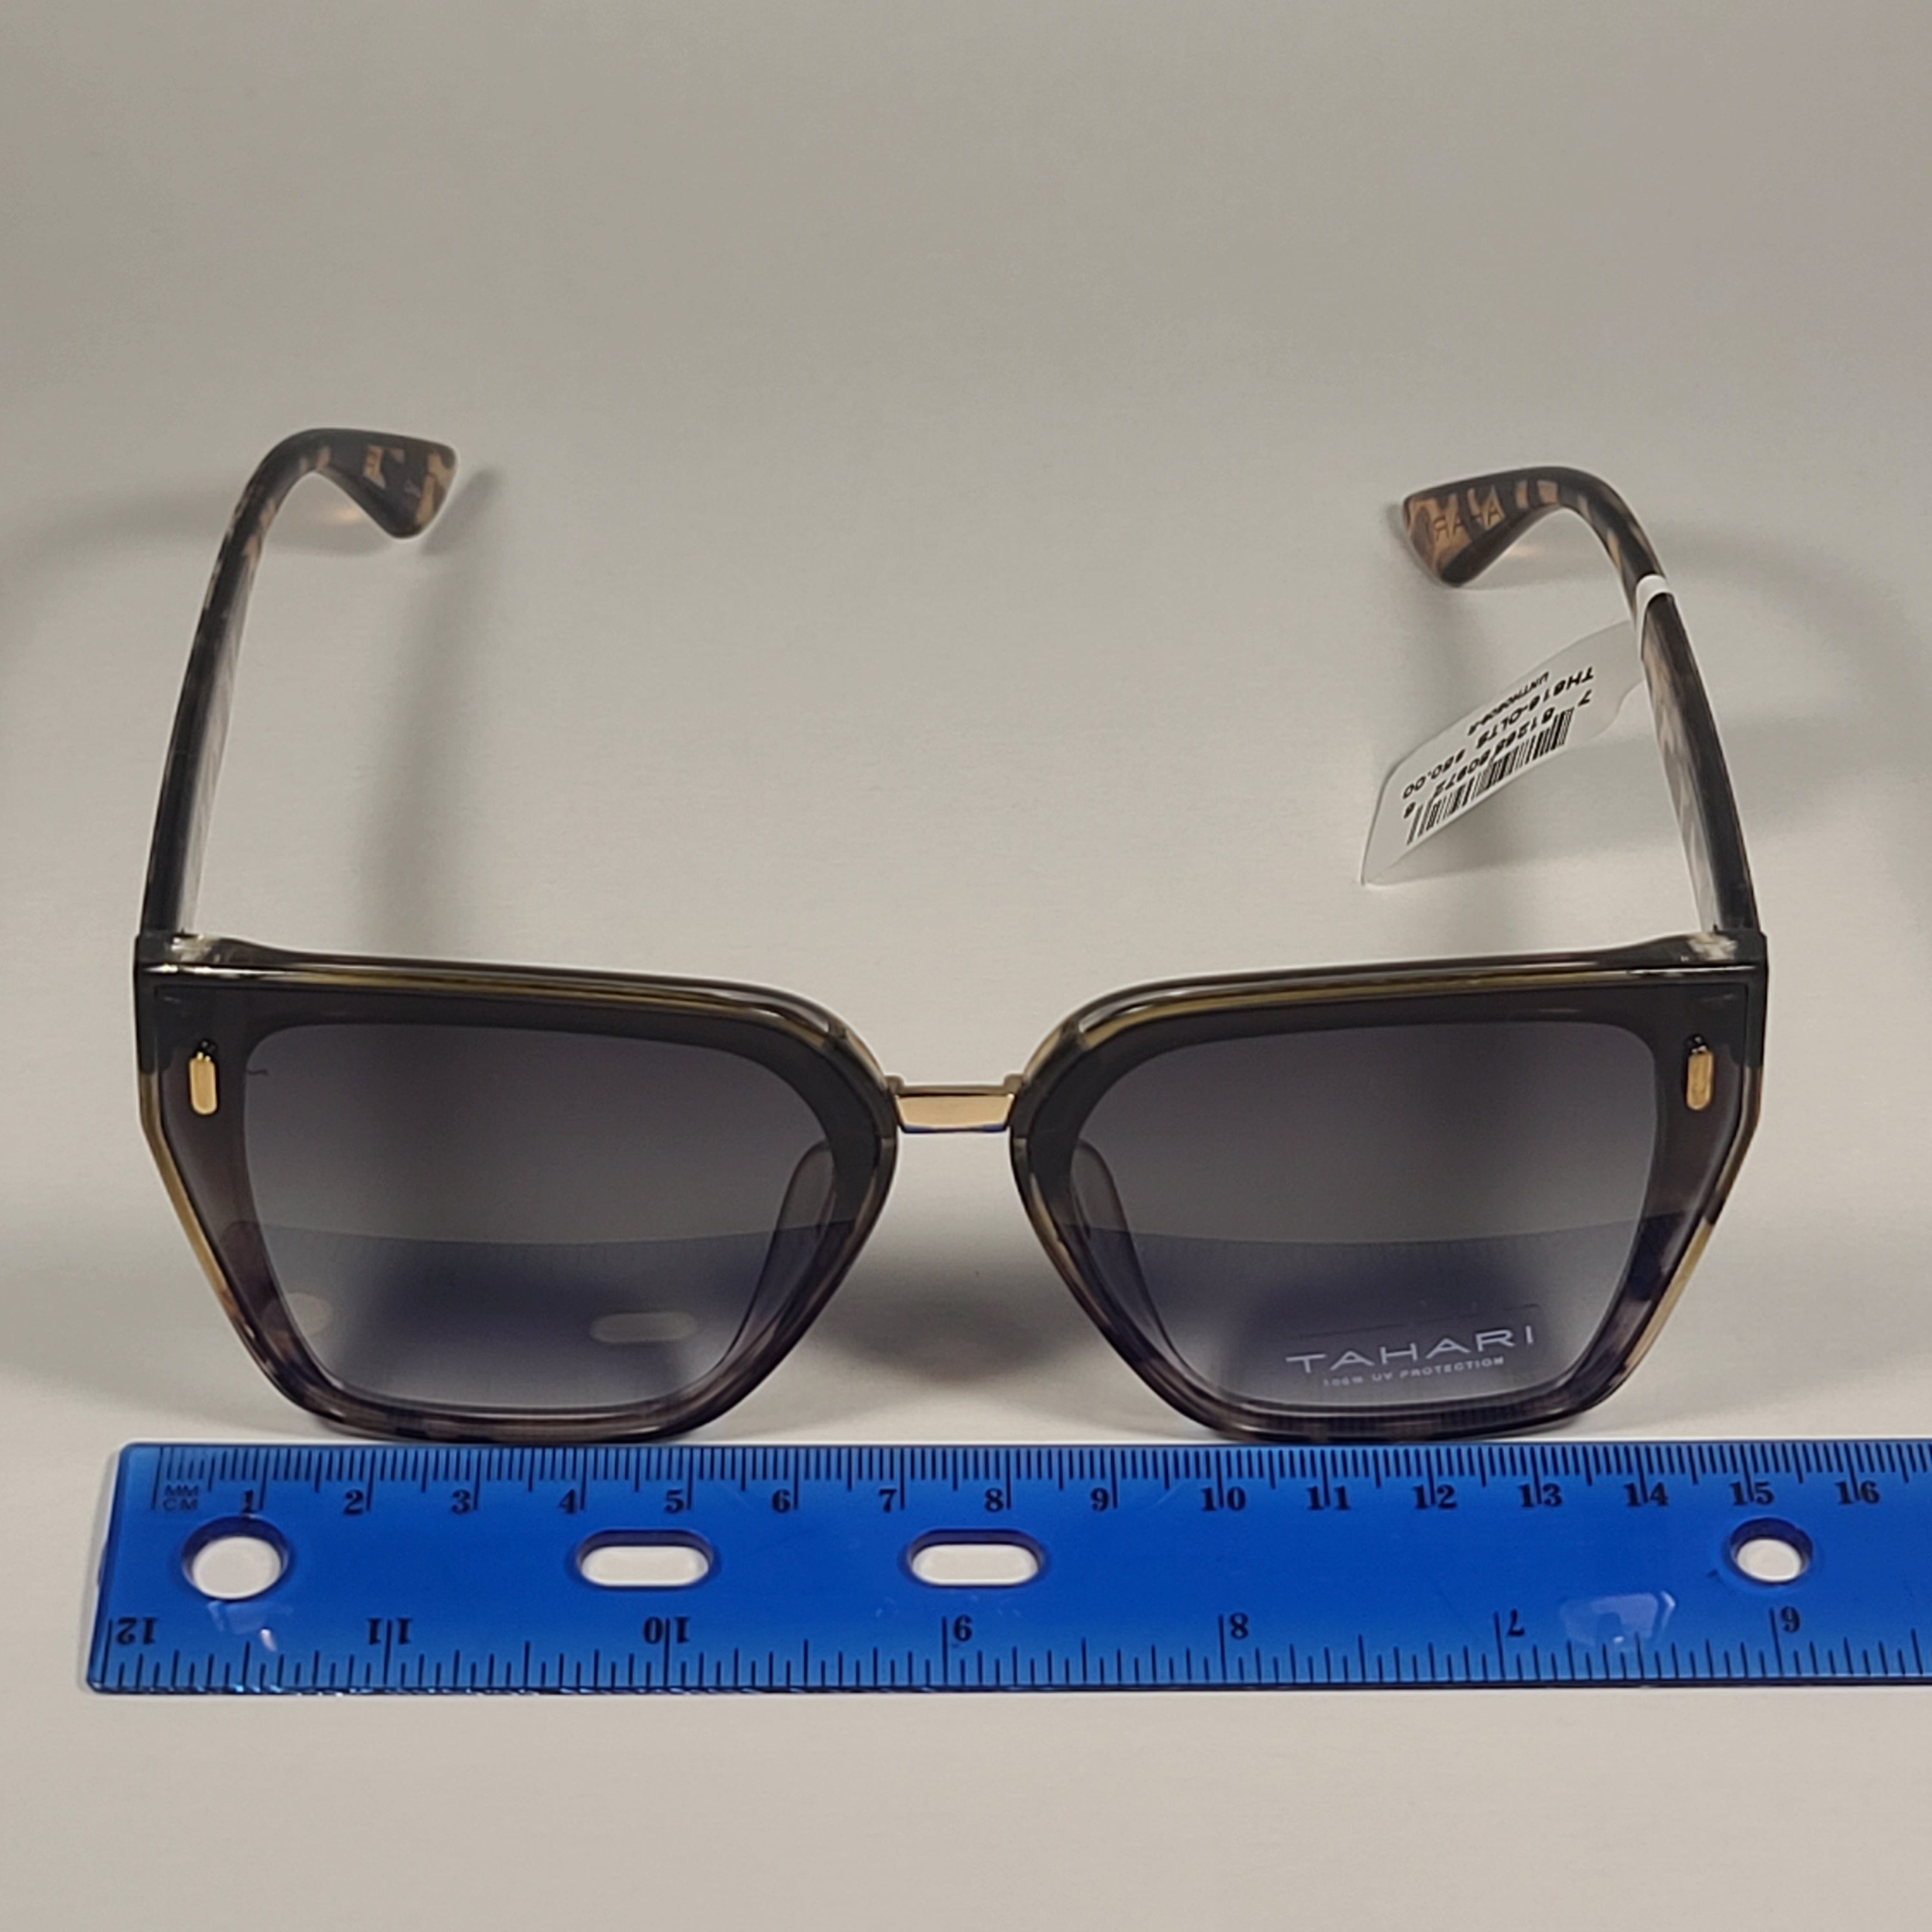 Tahari Cat Eye Shield Sunglasses Light Tortoise Frame Gray Gradient TH816  OLTS